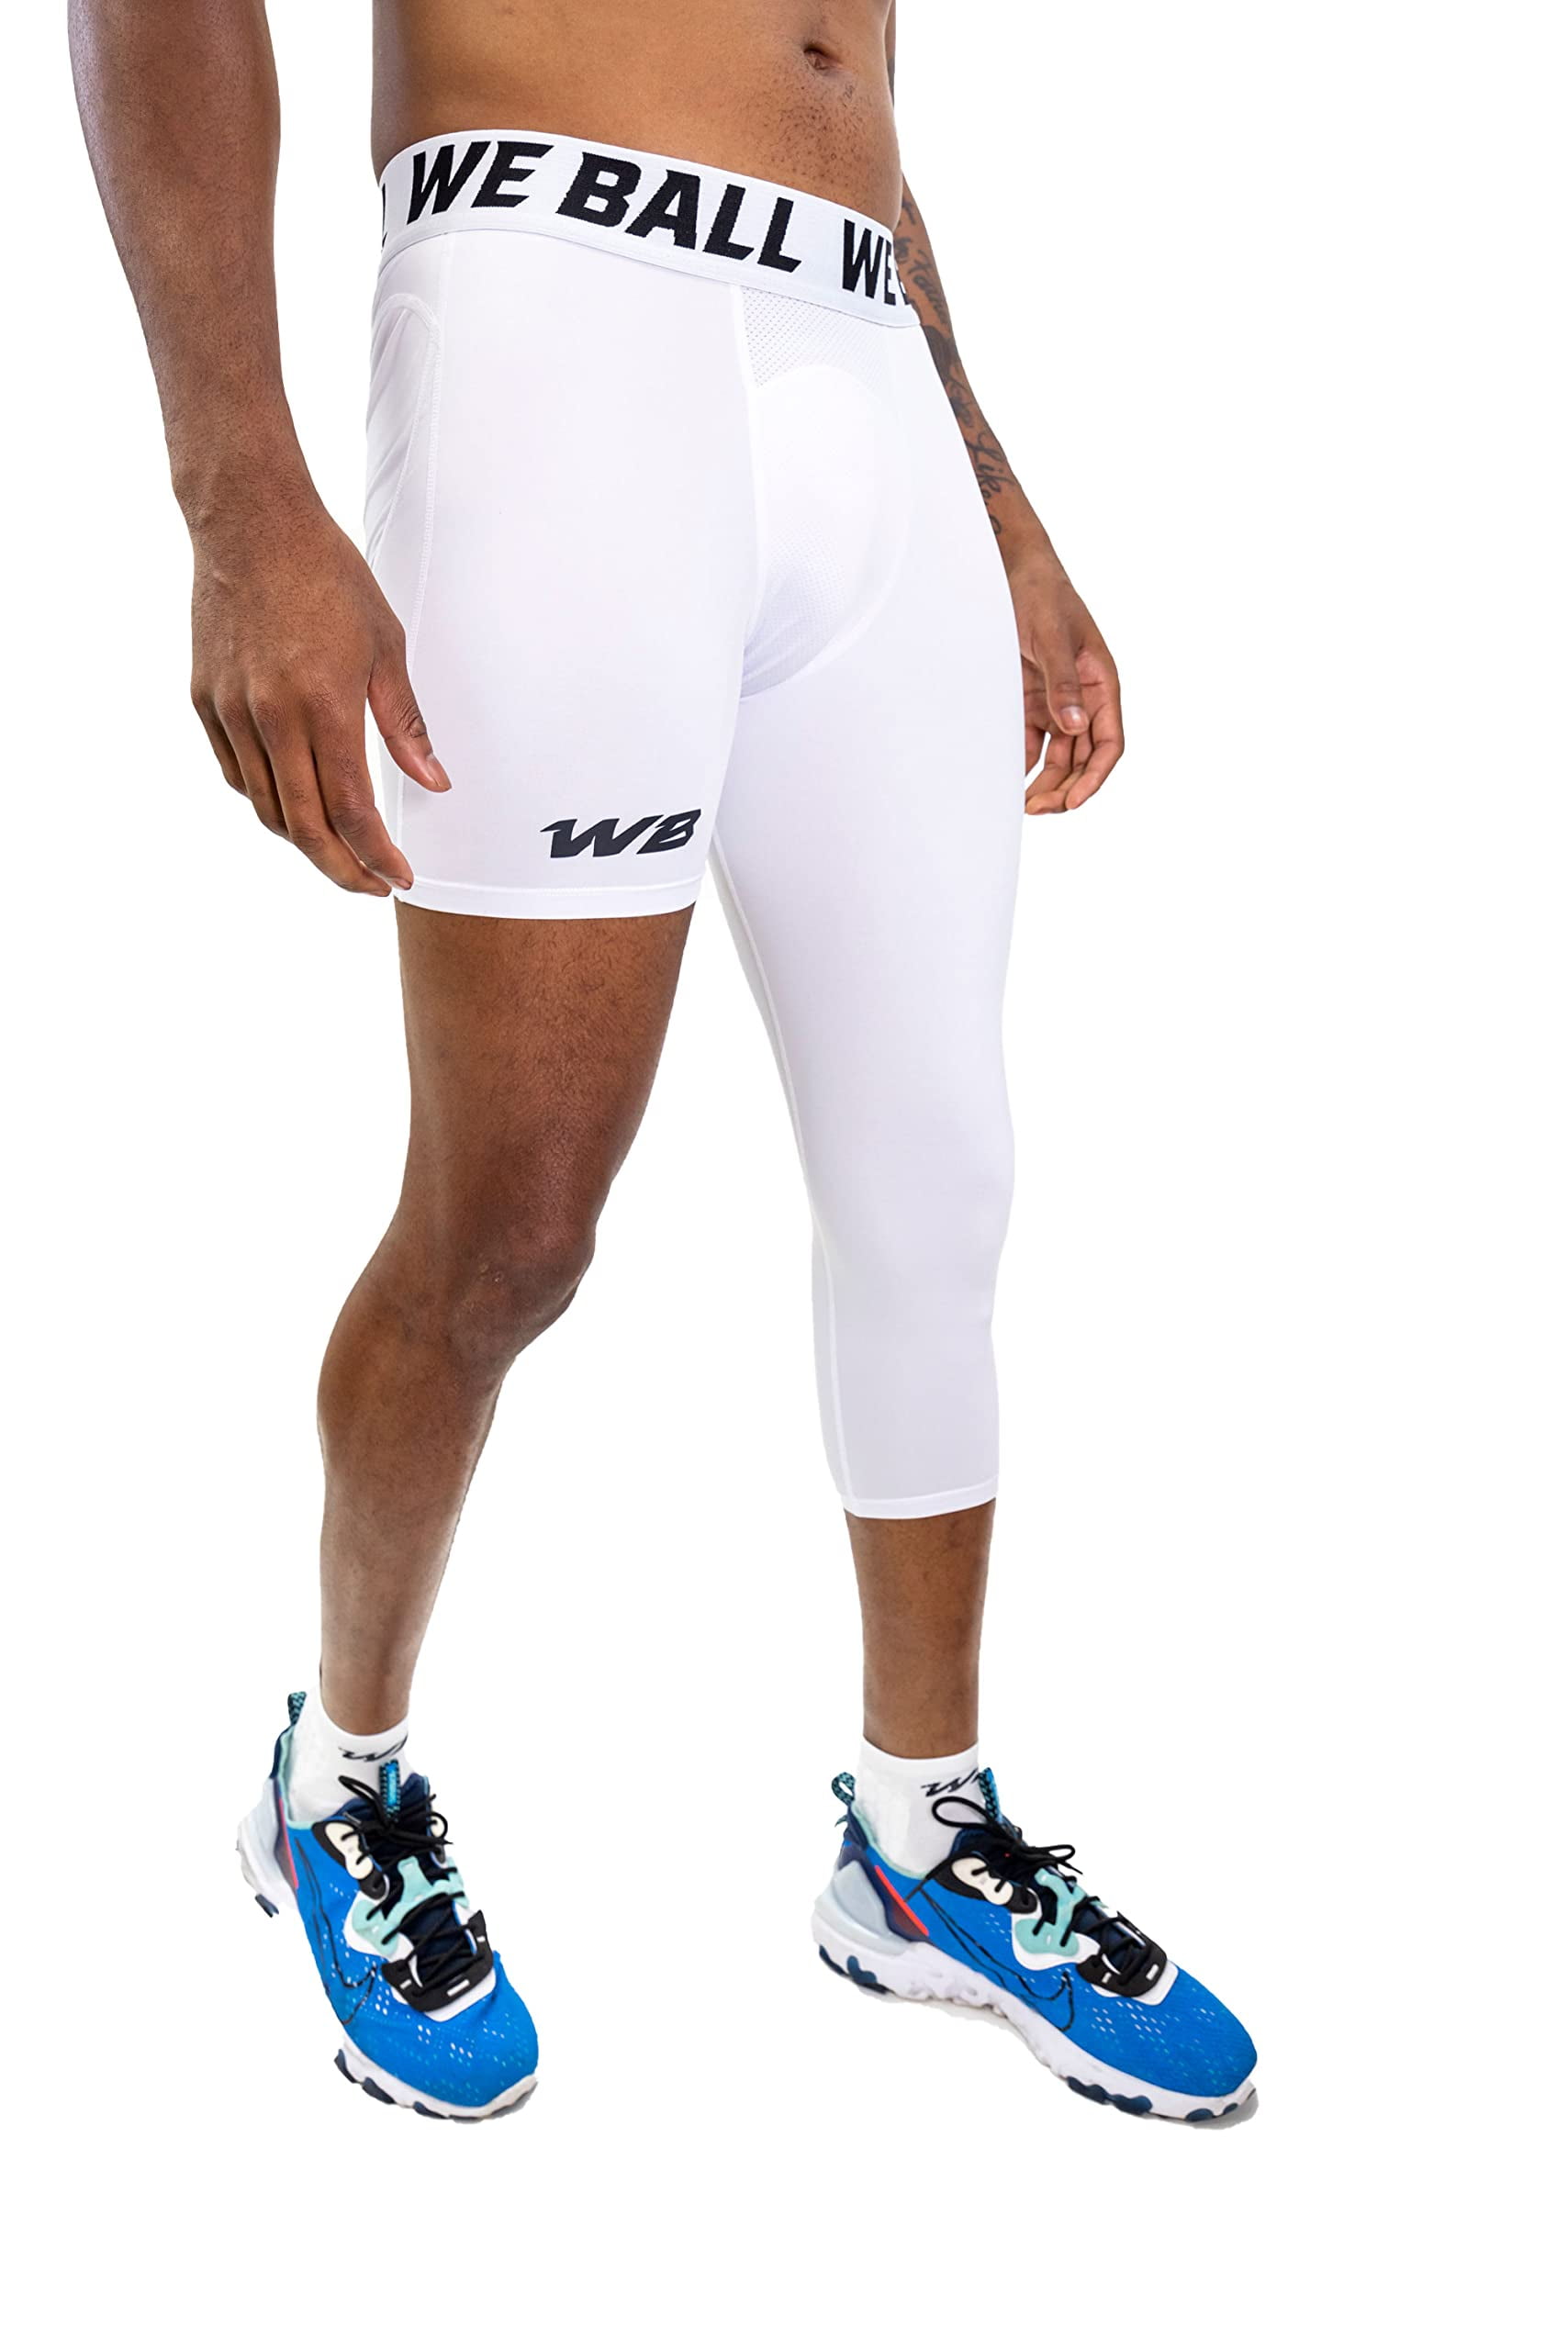 JanJean Mens Compression Short Leggings Bulge Pouch Shorts Swim Trunks  Fitness Gym Sportswear Black Medium at  Men's Clothing store